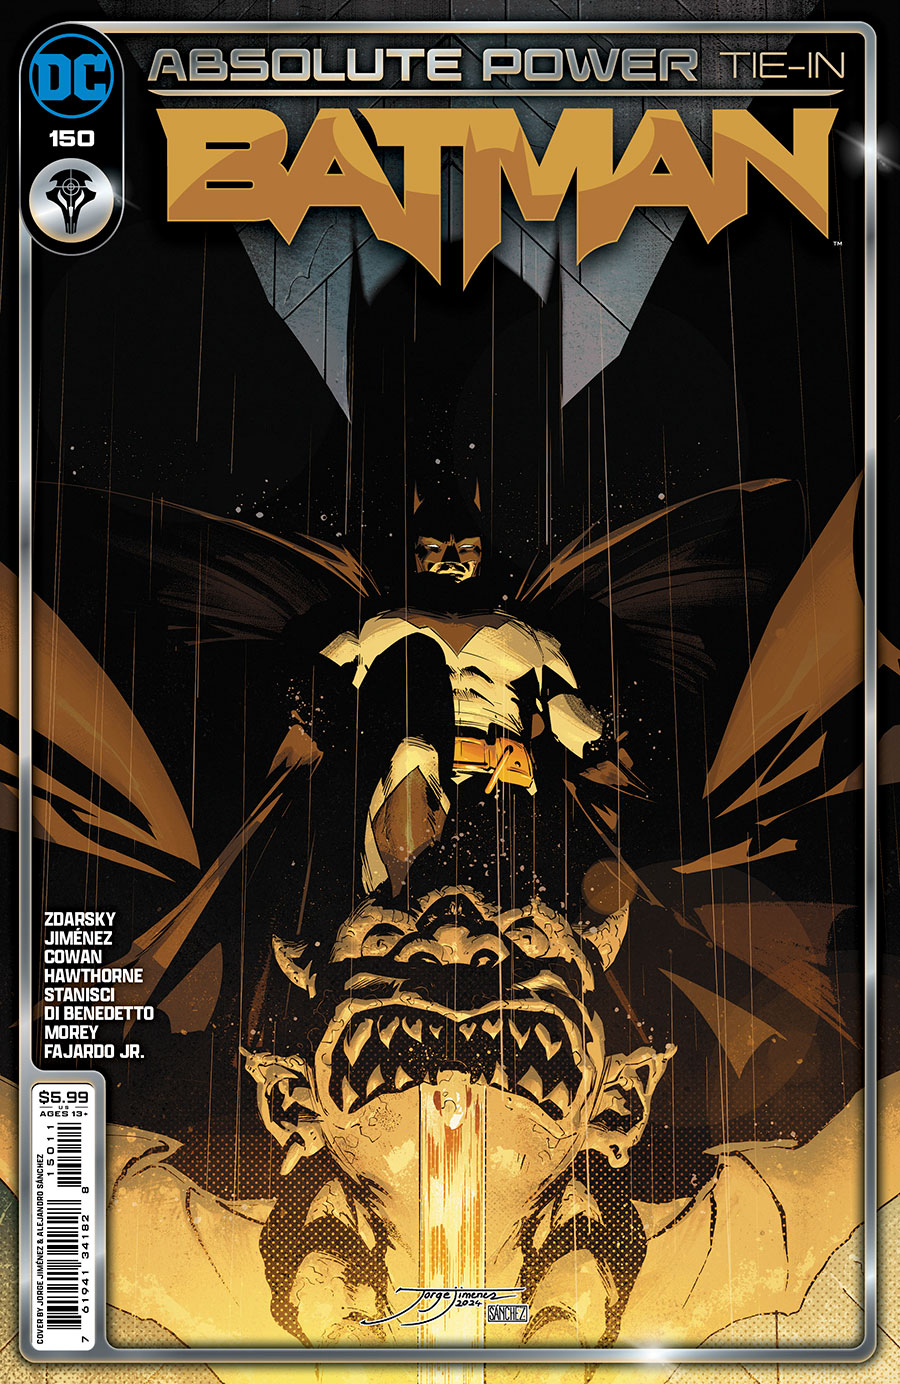 Batman Vol 3 #150 Cover A Regular Jorge Jimenez Cover (Absolute Power Tie-In)